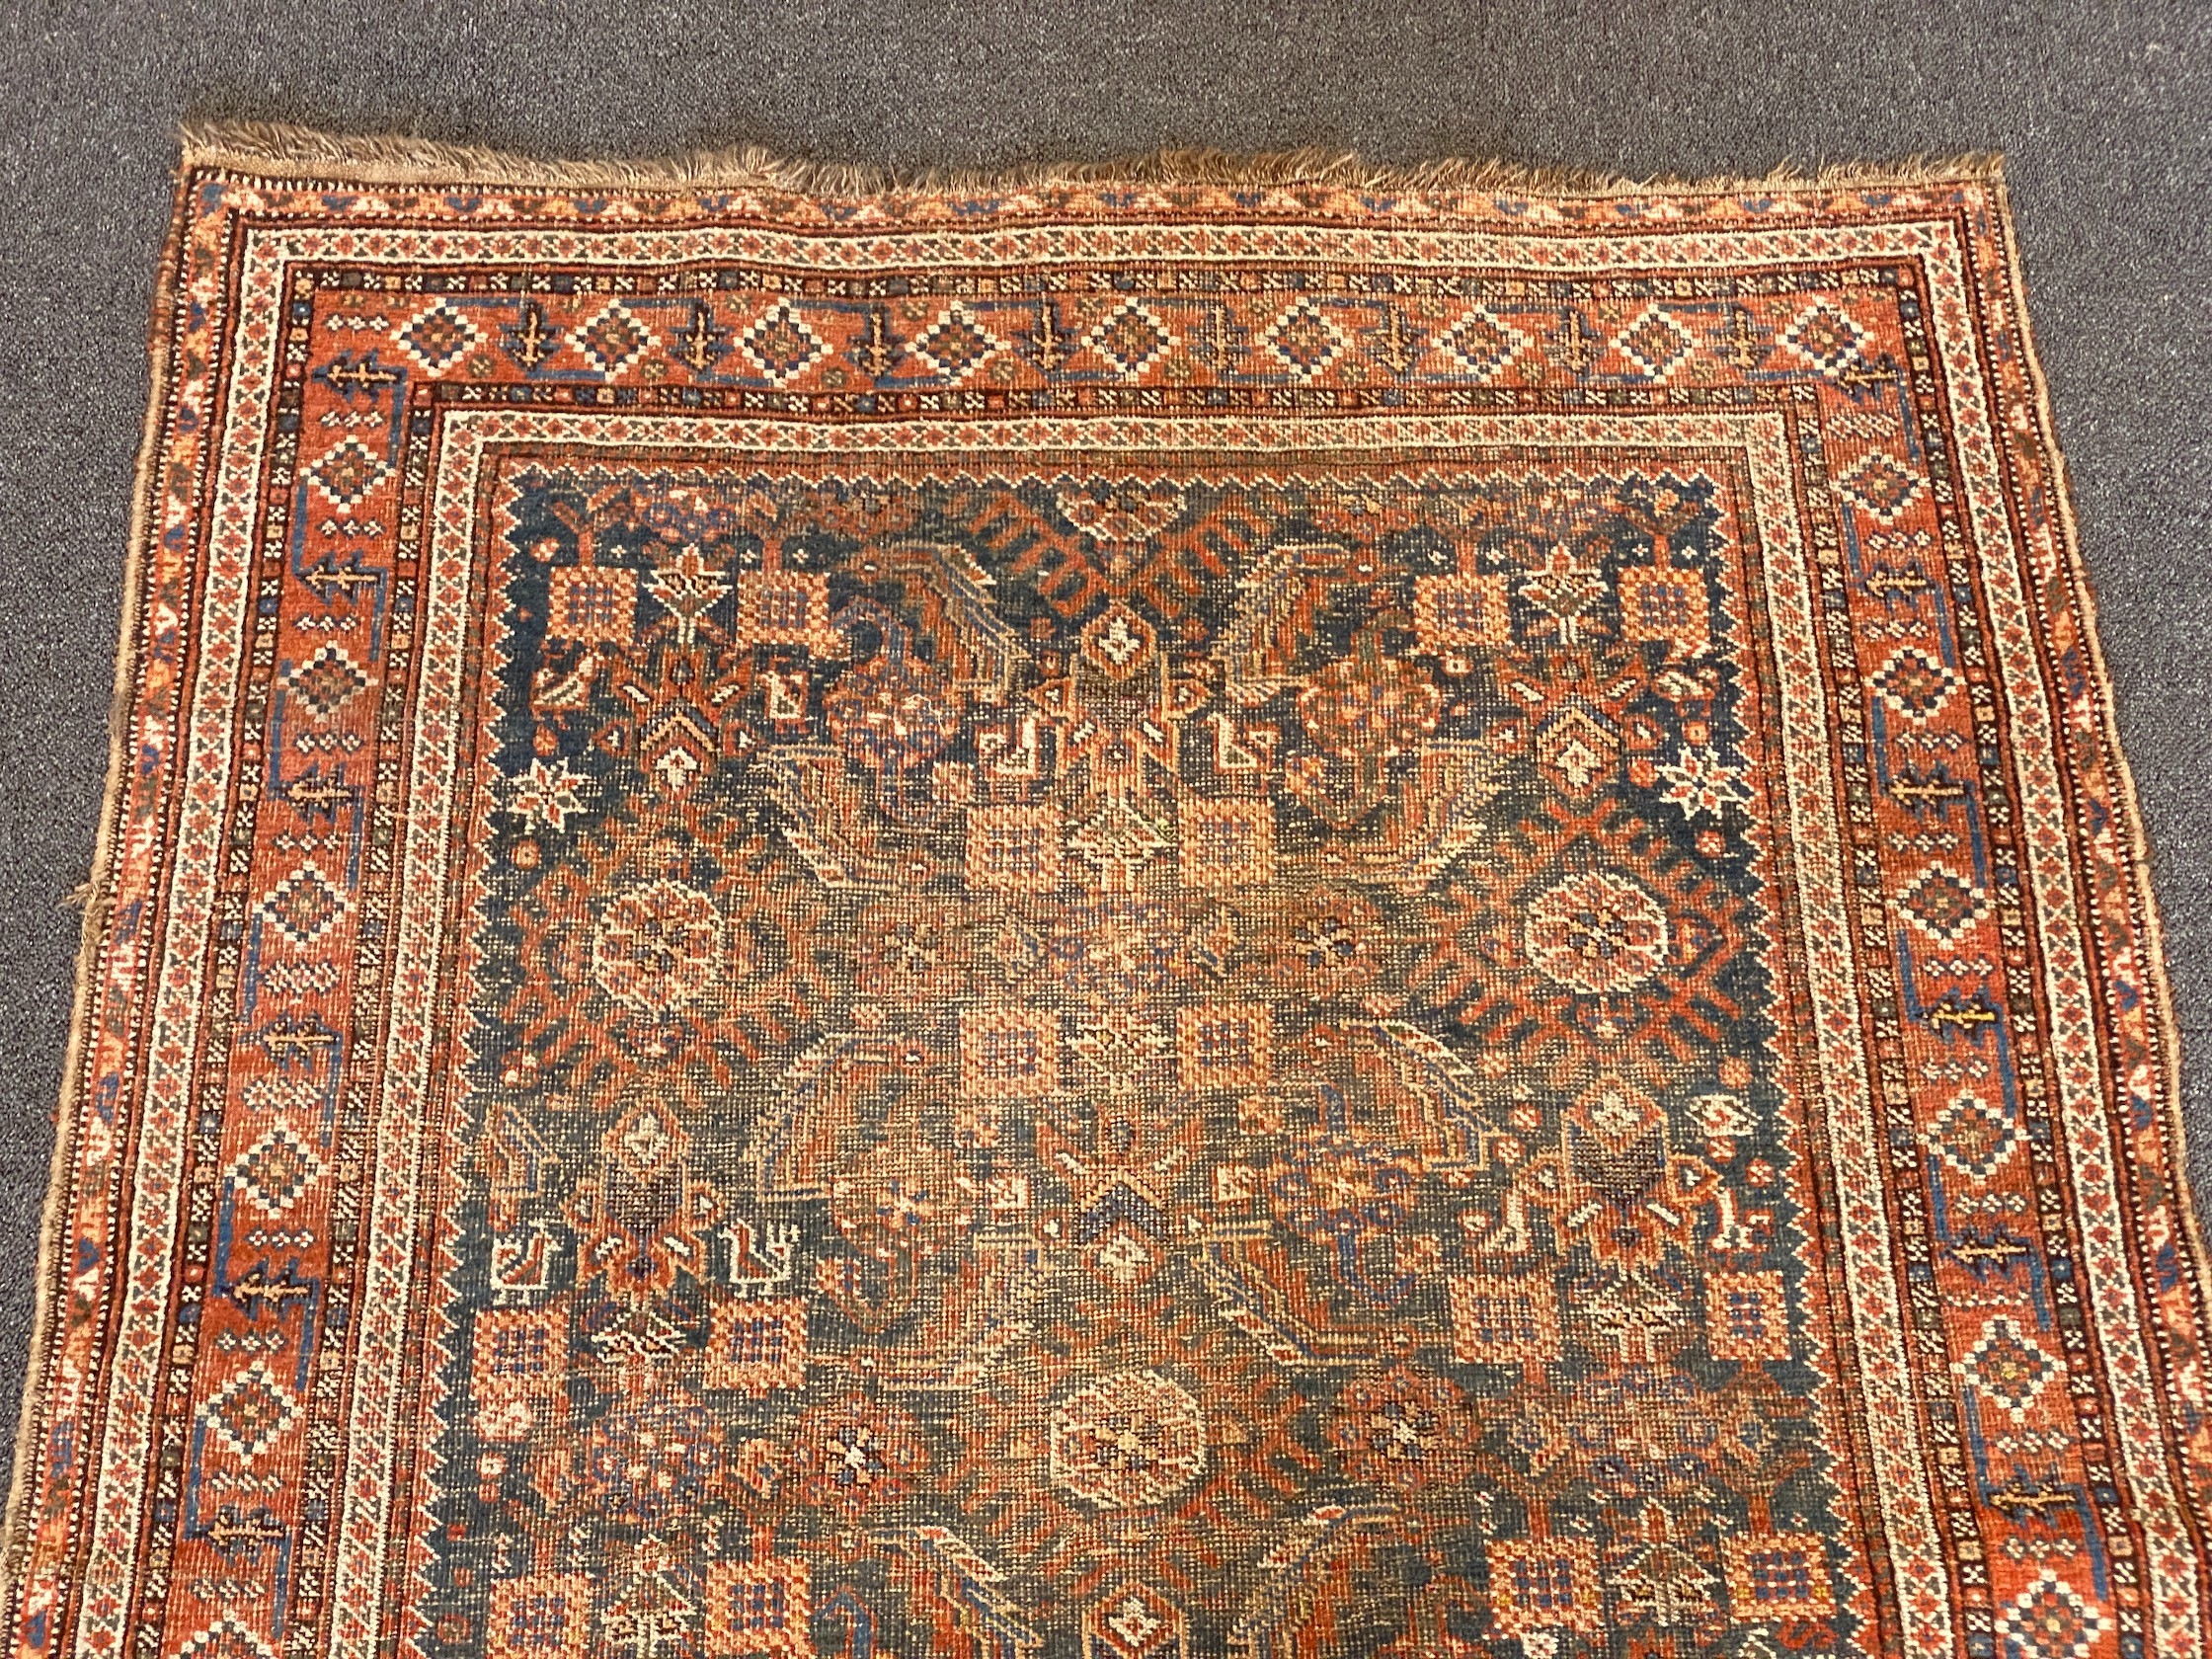 A Shiraz blue ground rug with dense floral field (worn), 144 x 102 cms